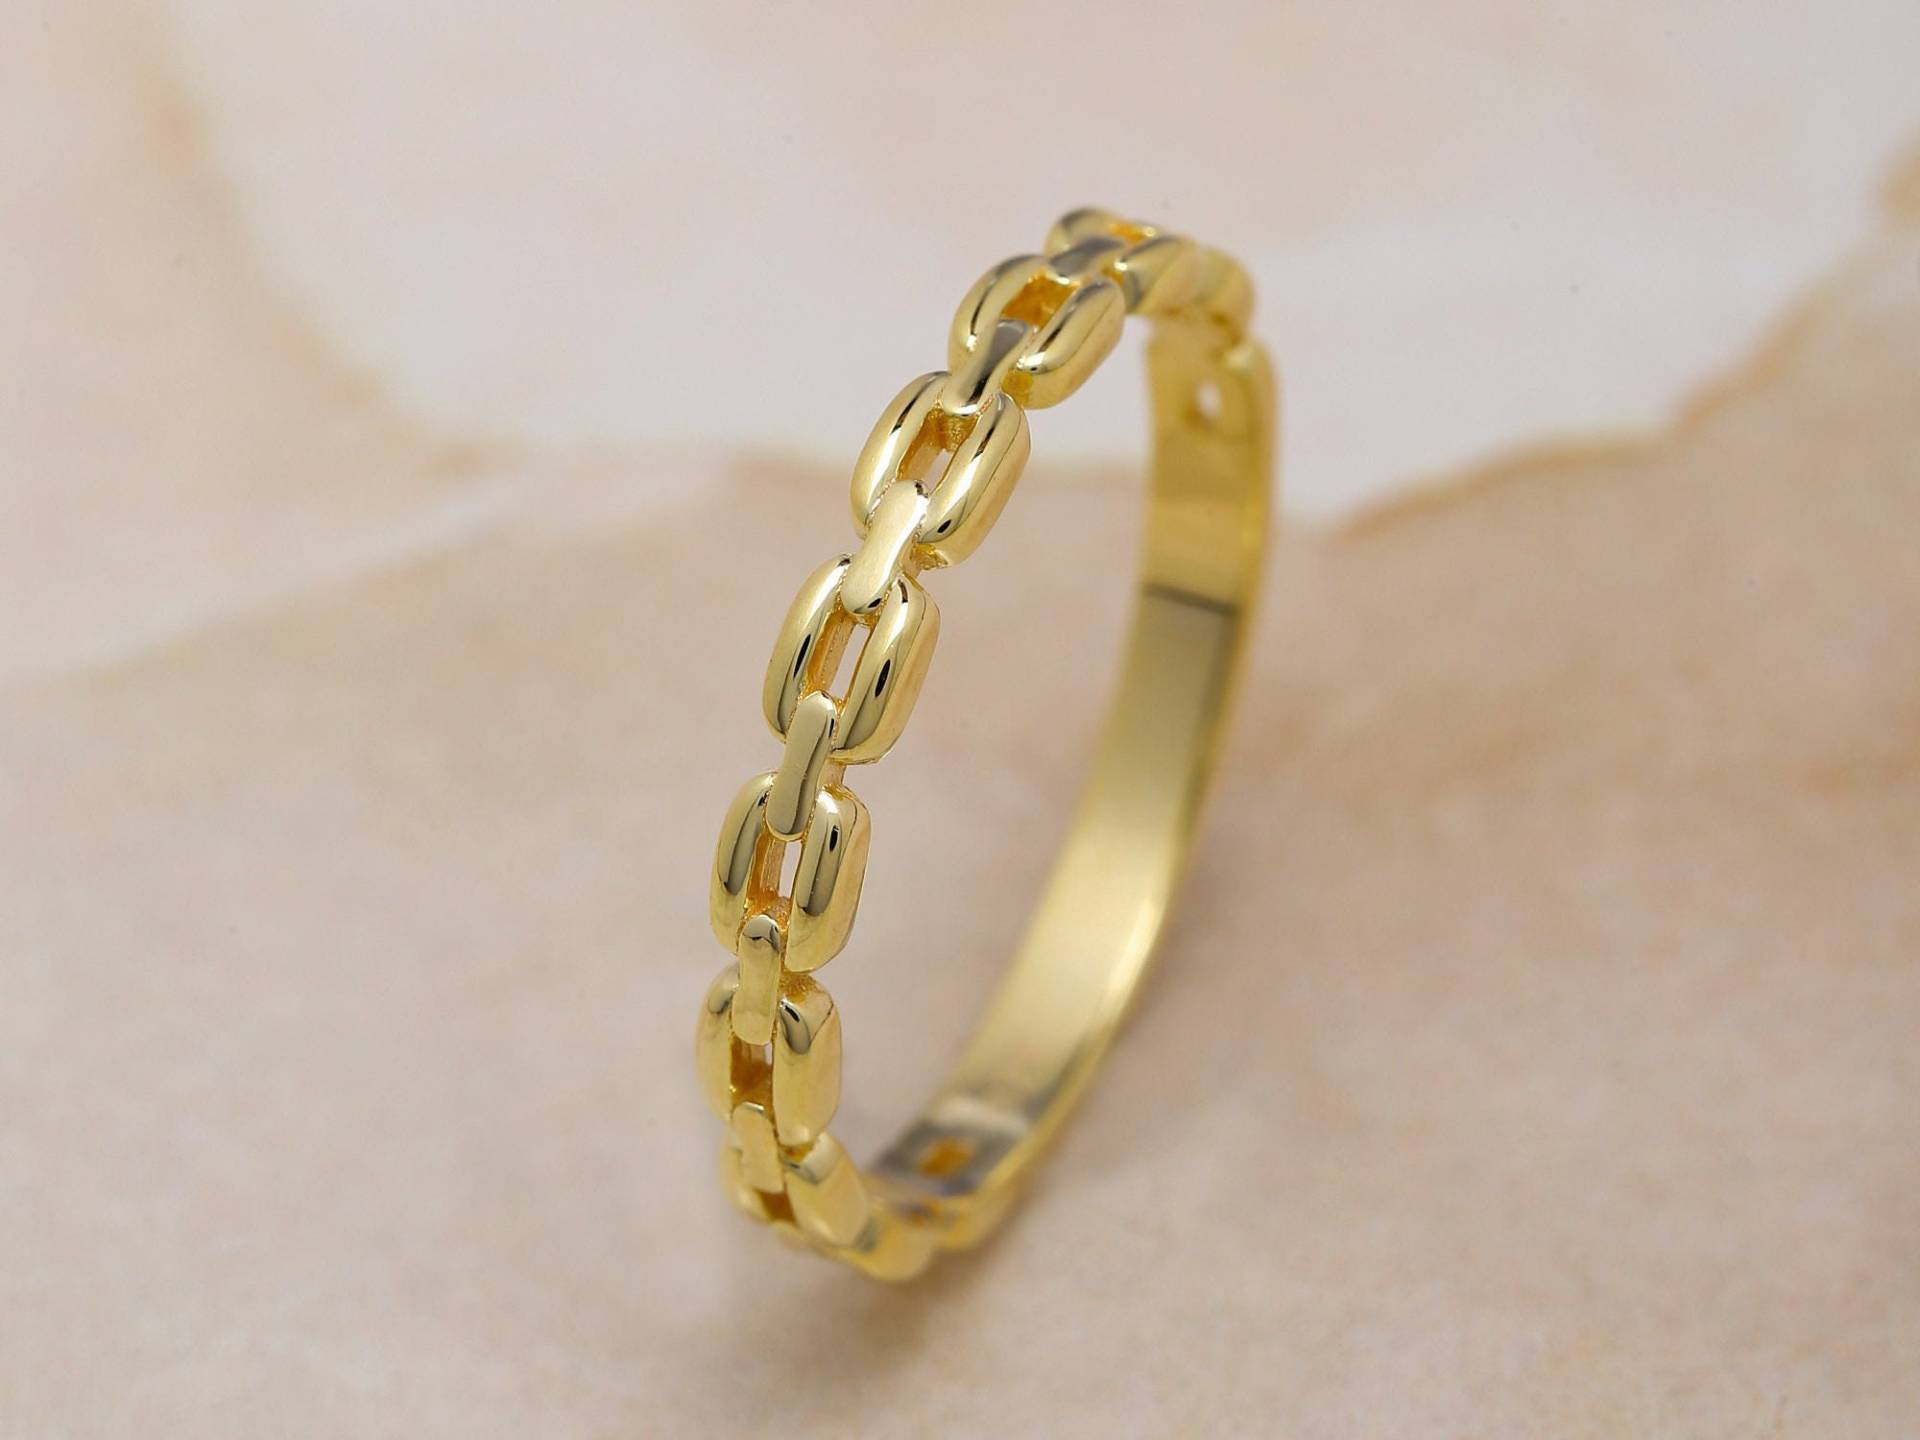 14K Solid Gold Kettenförmiger Ring, 925 Sterling Silber Kettenform Einzigartiger Goldkettenring, Kettenring, Handgemachter Goldring, Angst Ring von ErsJewelryDesign